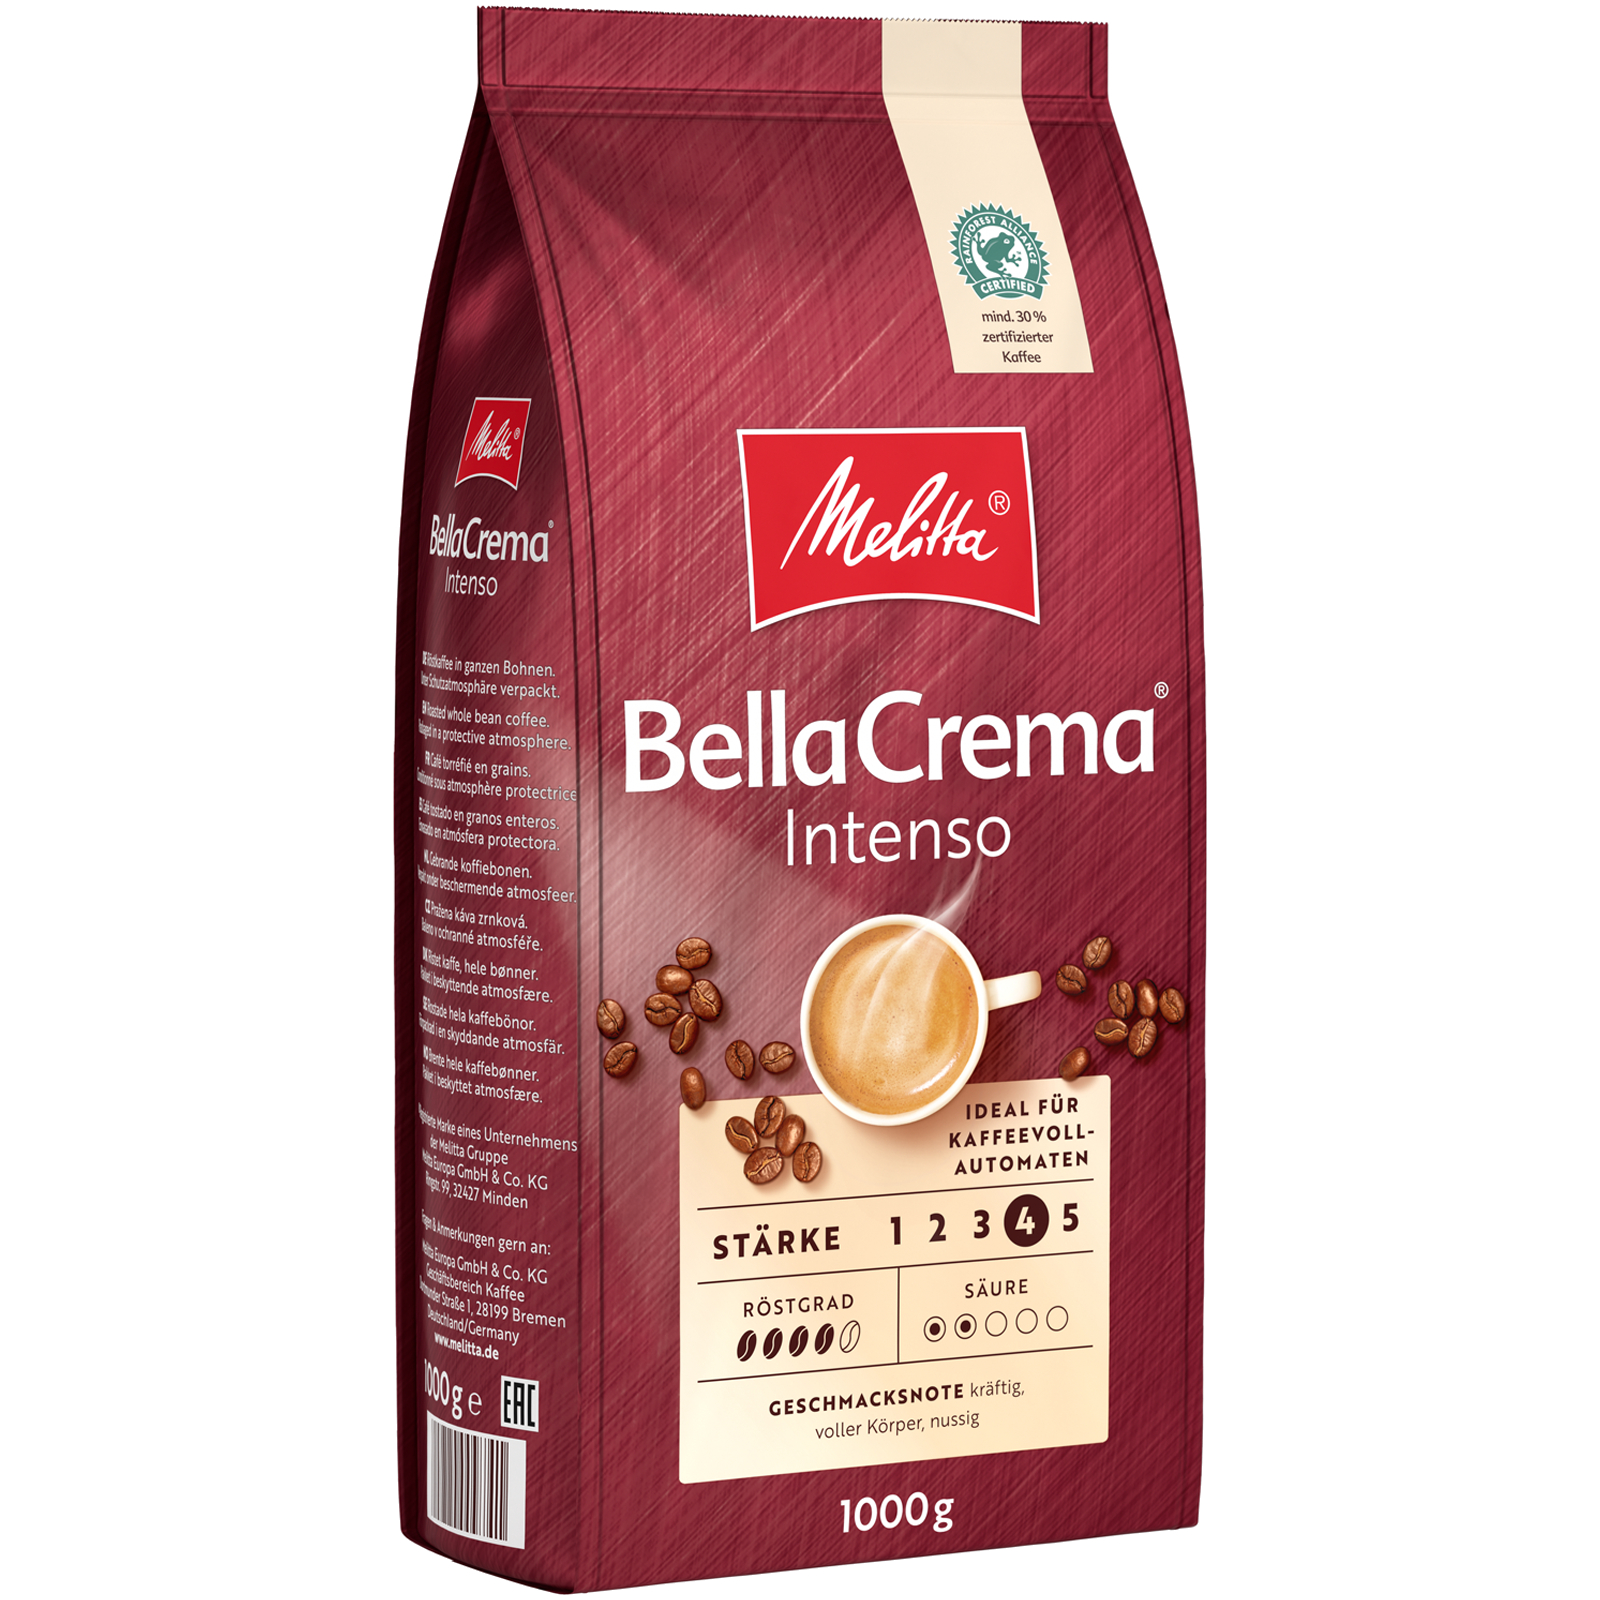 MELITTA BellaCrema Probierset Kaffeebohnen 4x1kg